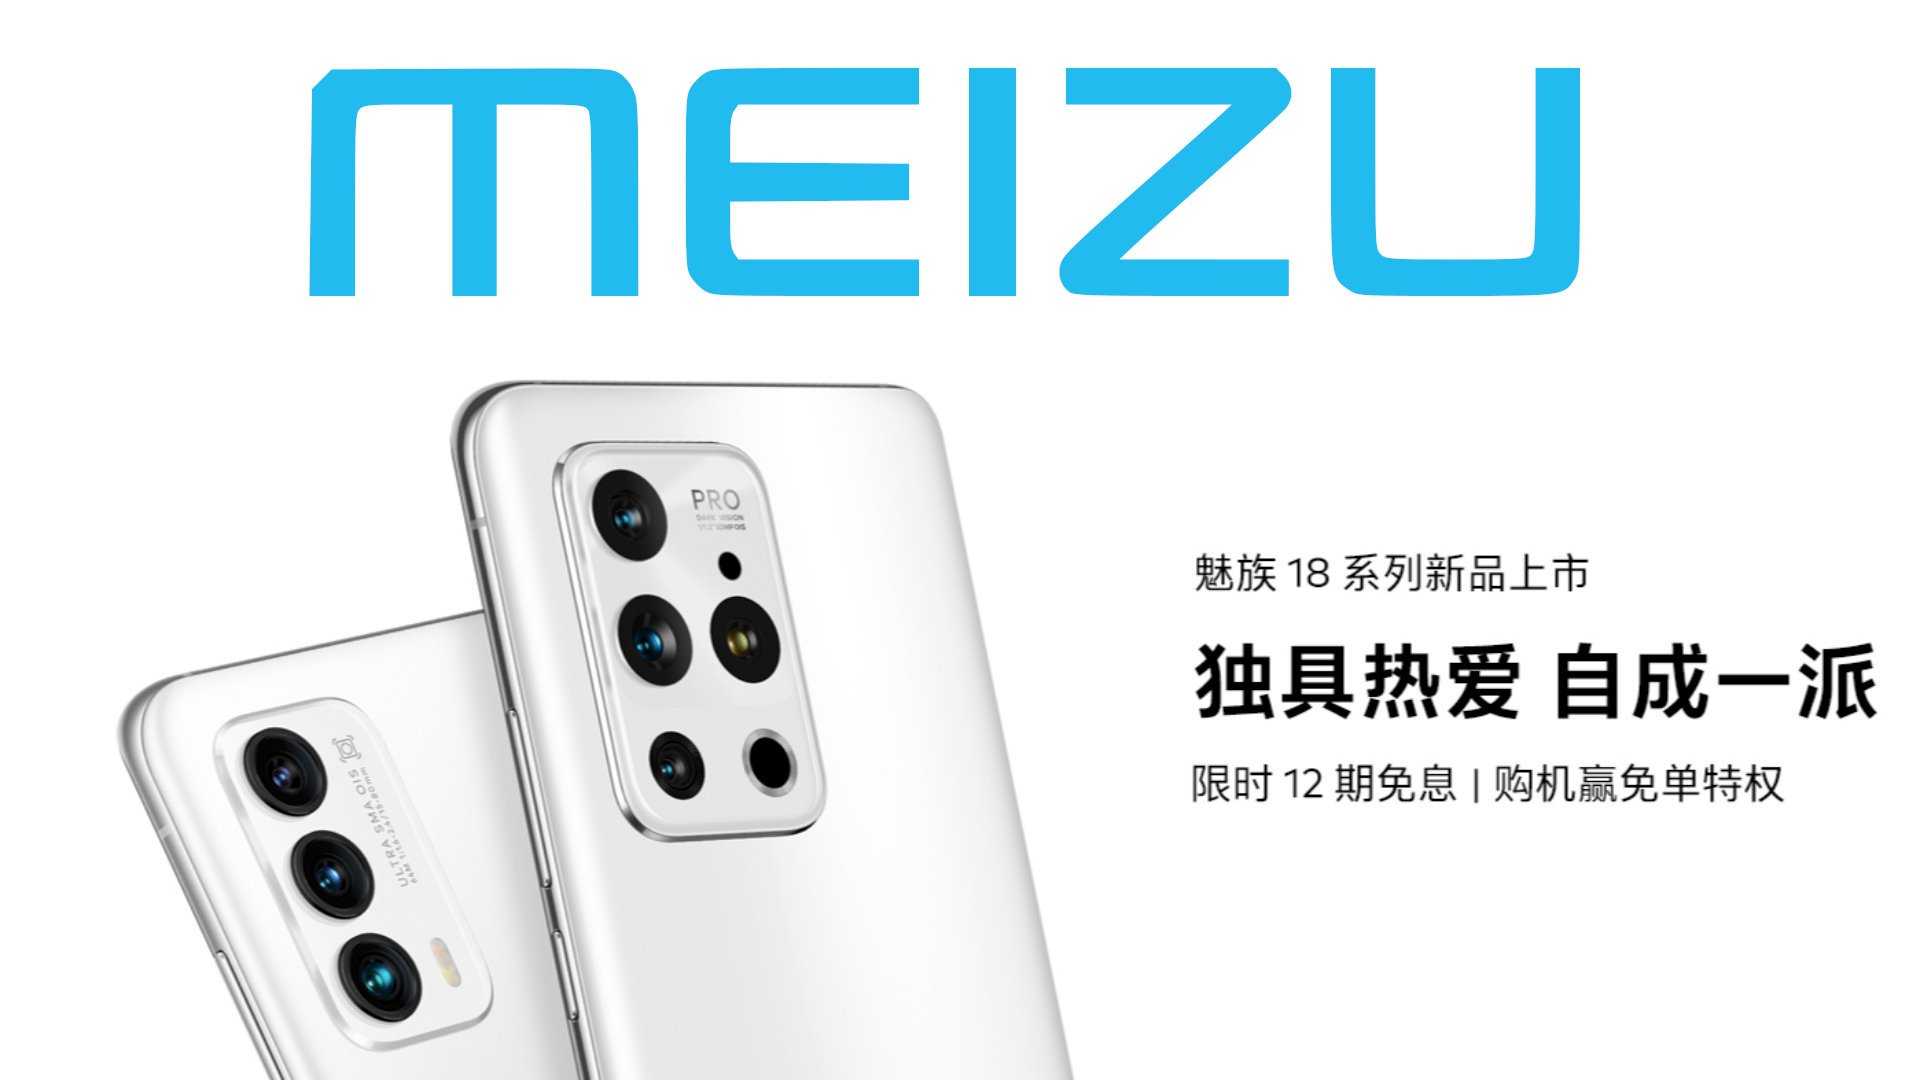 Meizu представила смартфоны meizu 18 и 18 pro